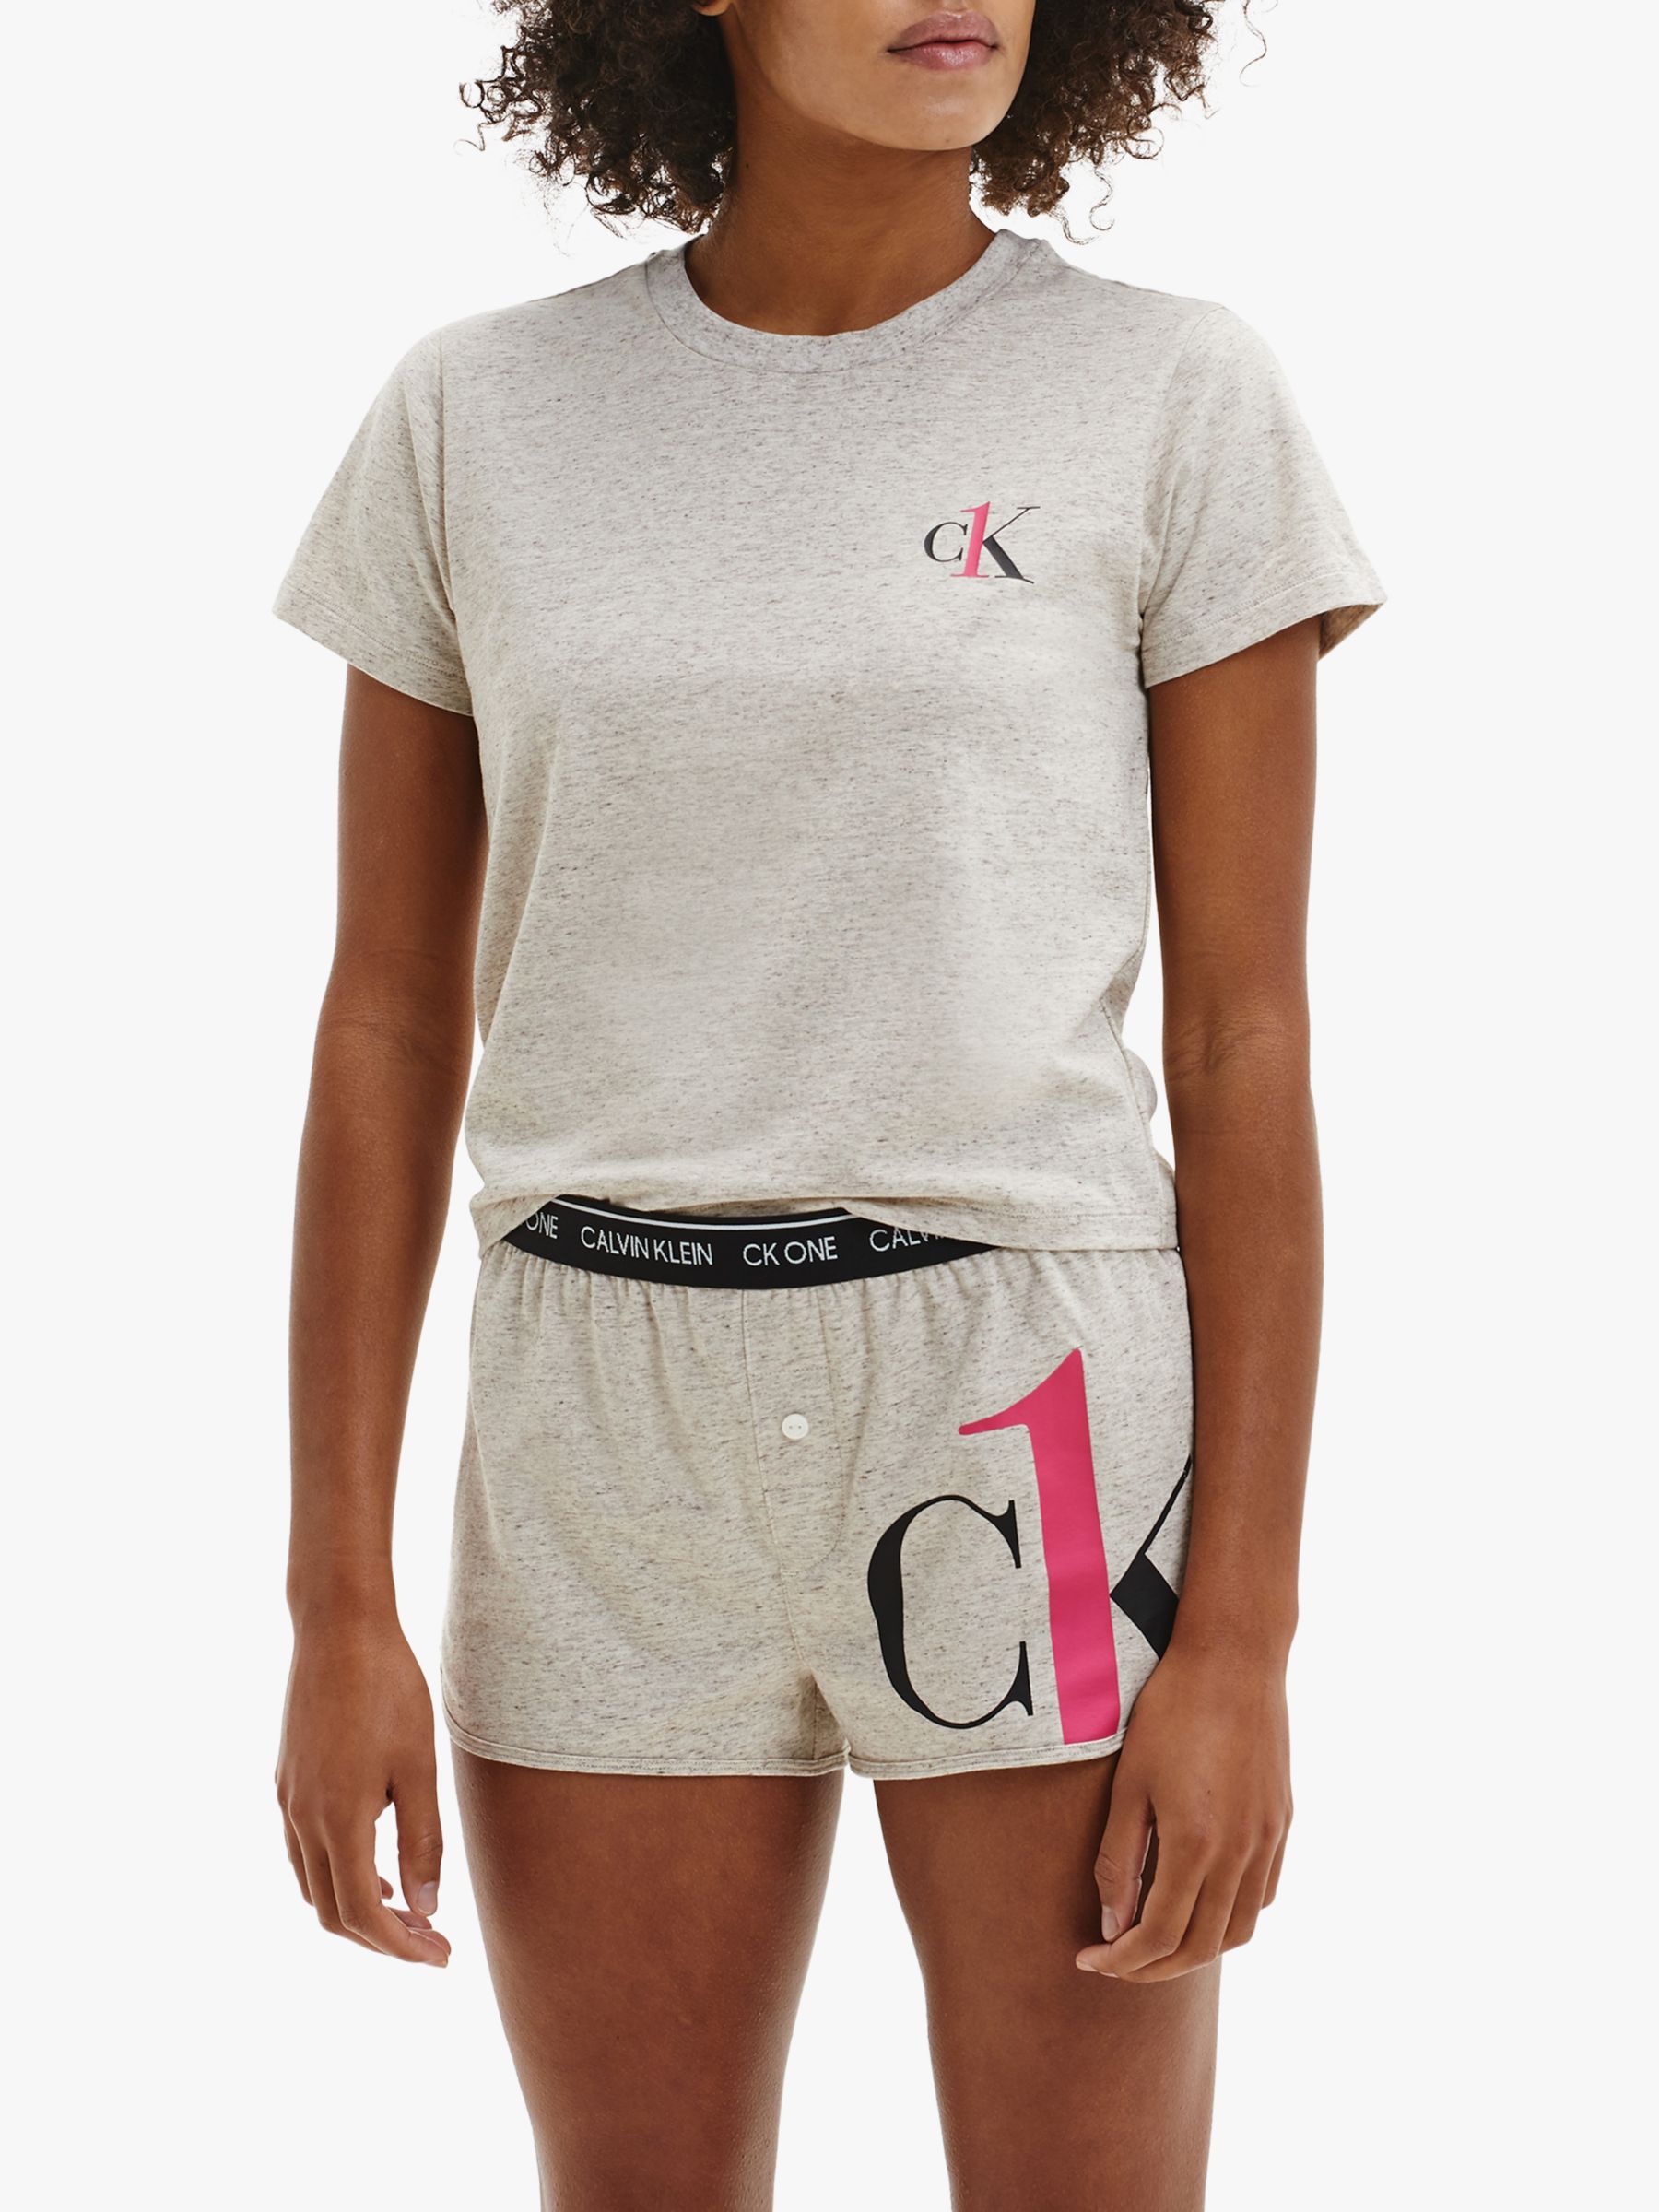 Calvin Klein CK One Logo Shorts Pyjama Set, Buff Heather